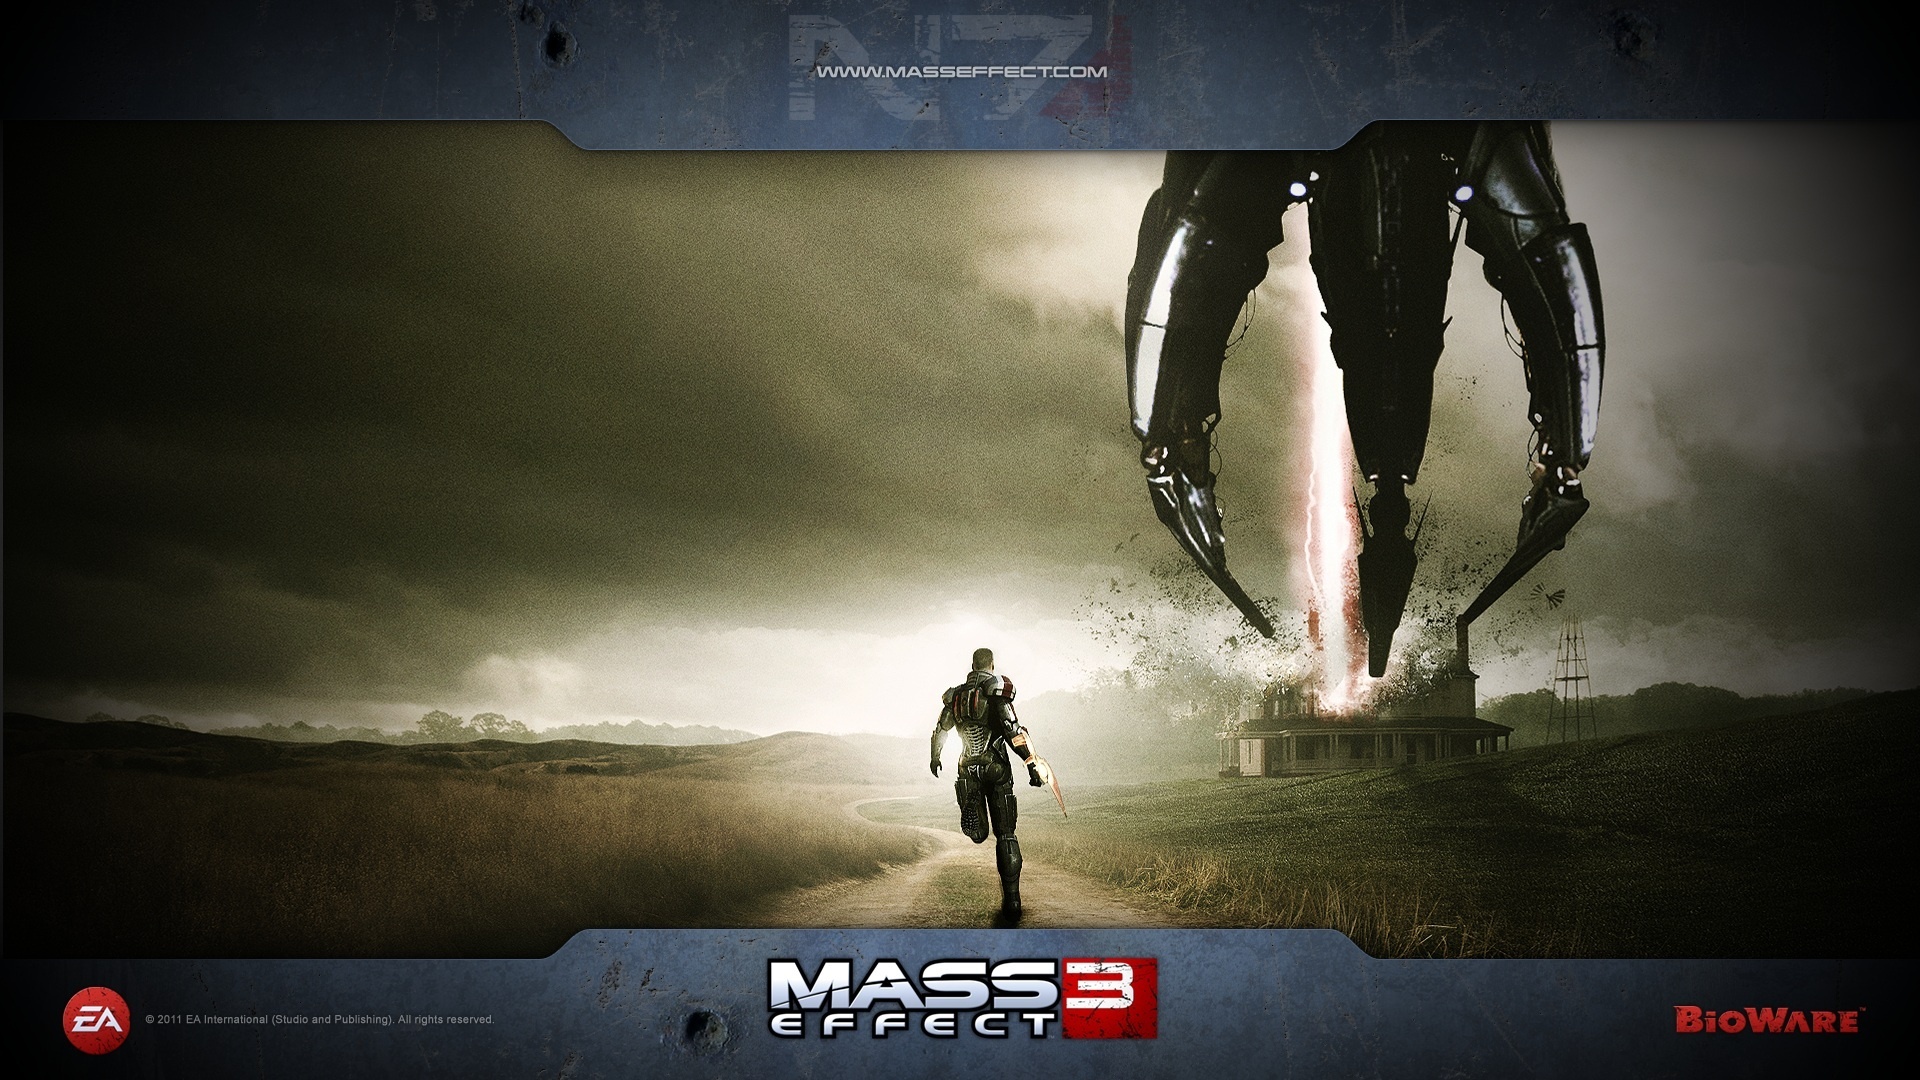 Mass Effect Shepherd Reaper Games #9Ben